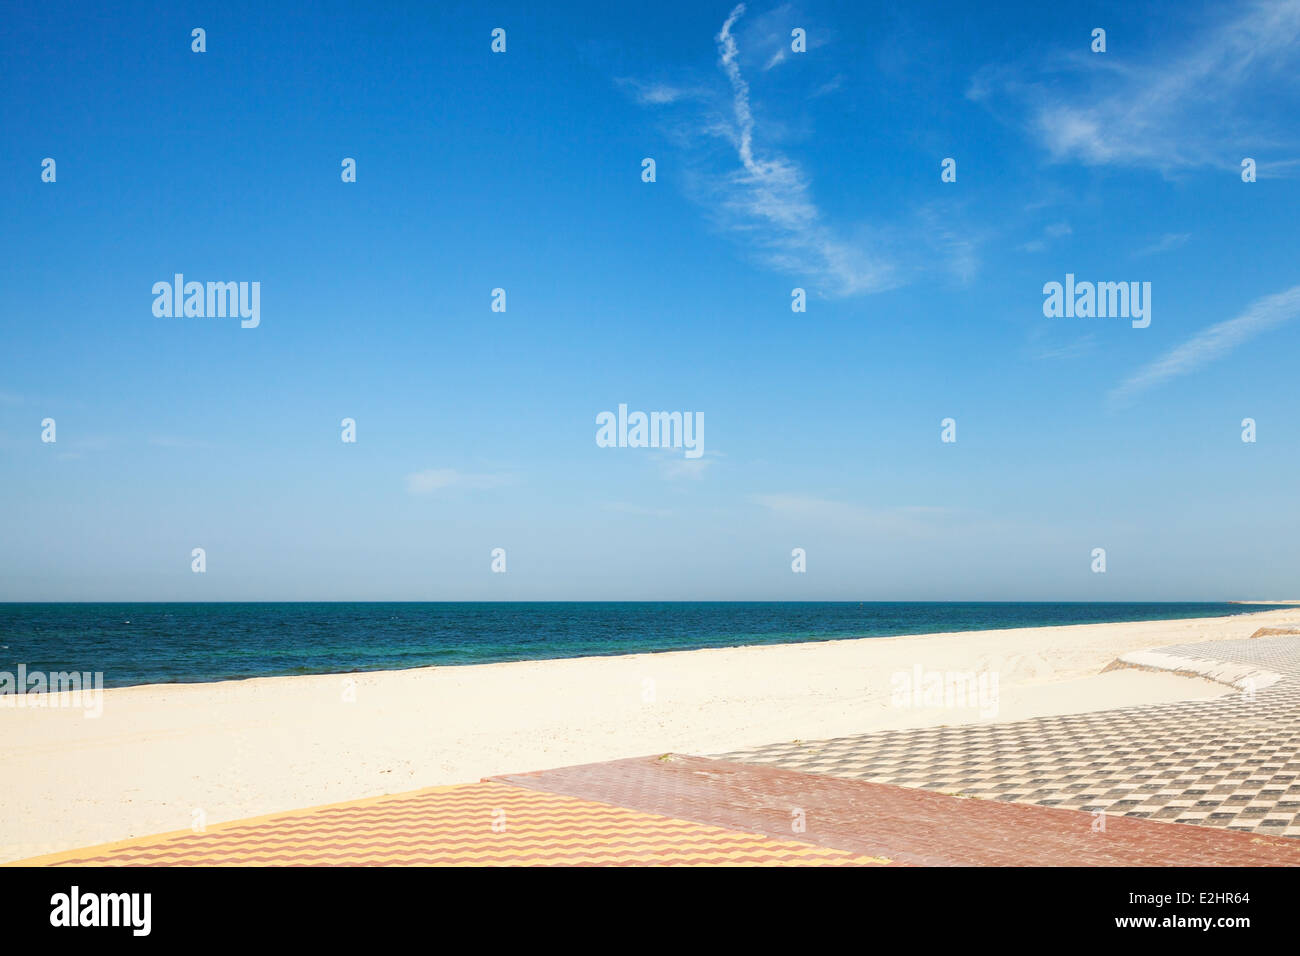 Sandy beach with decorative pavement, Ras Tanura, Saudi Arabia Stock Photo